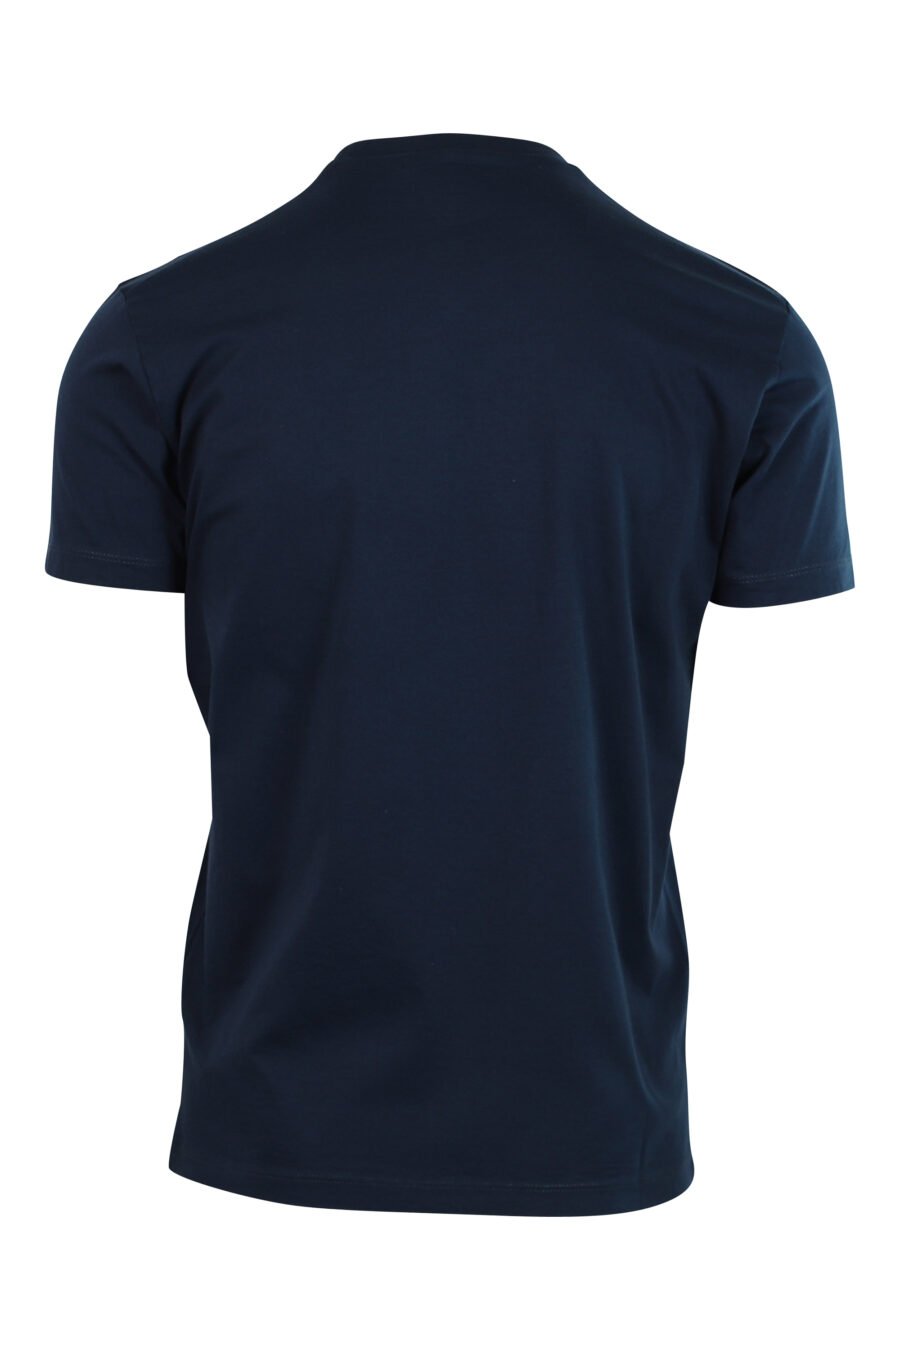 Dunkelblaues T-Shirt mit rotem Mini-Logo in einer Blattumrissgrafik - 8054148046569 2